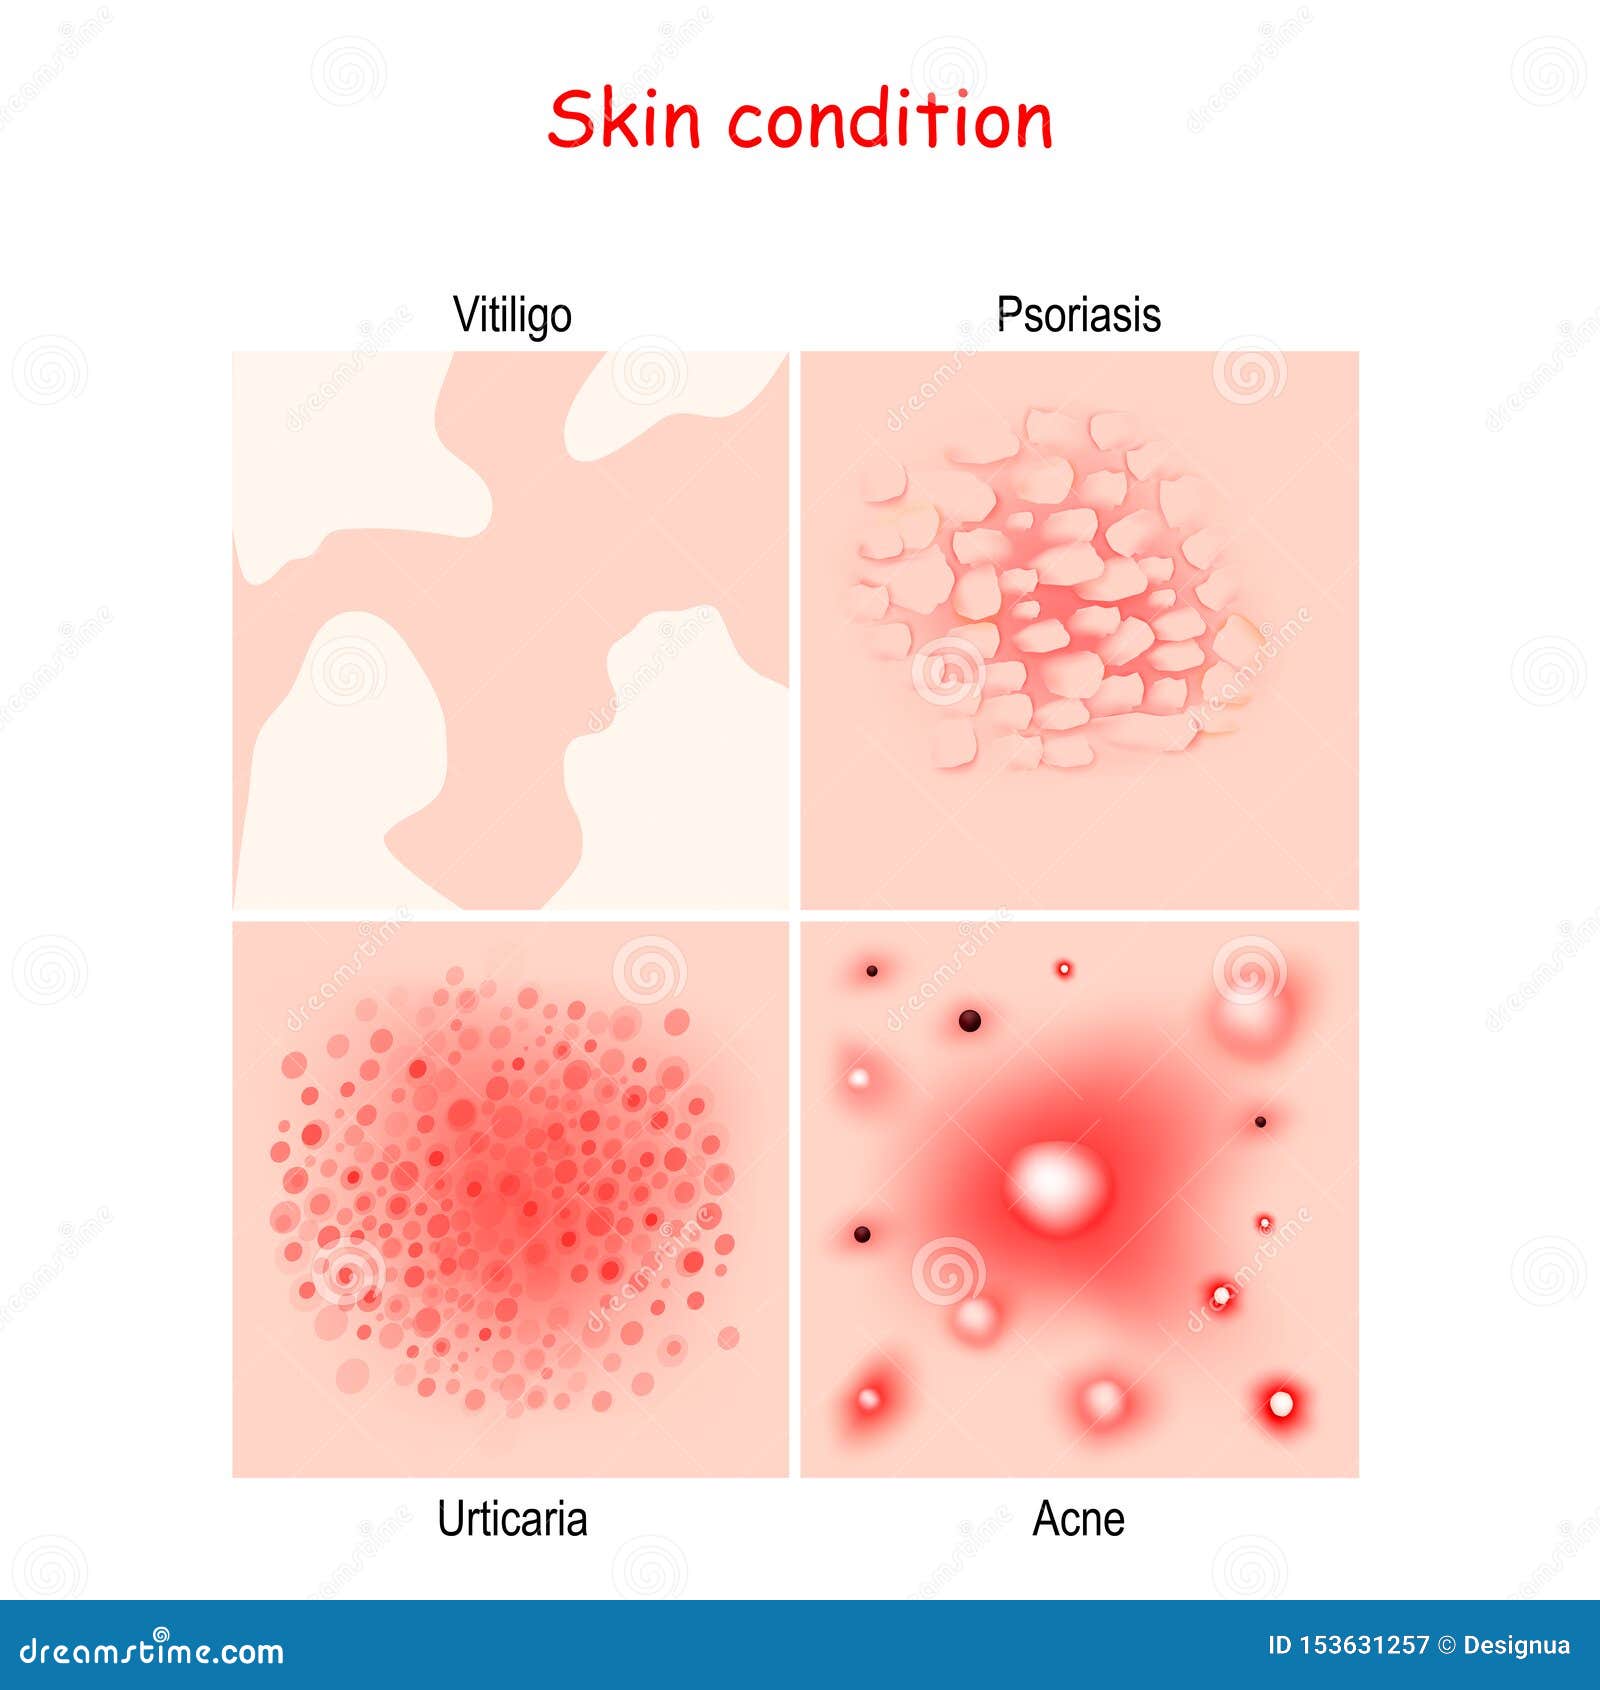 skin condition and diseases. close-up of acne, urticaria, psoriasis, vitiligo